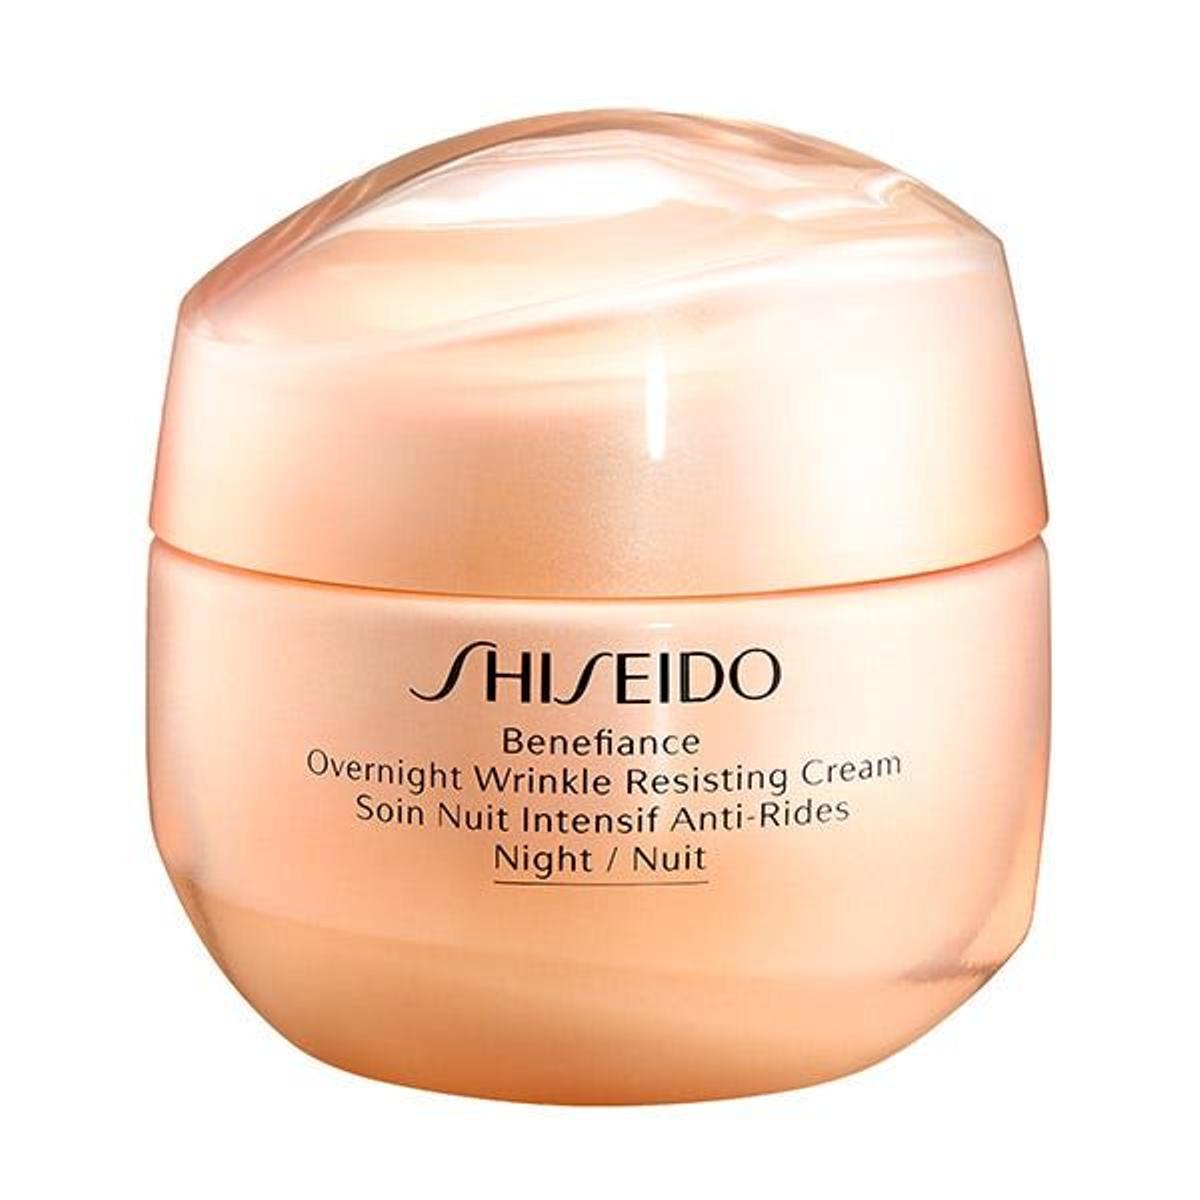 Benefiance Overnight Wrinkle Resisting Cream de Shiseido